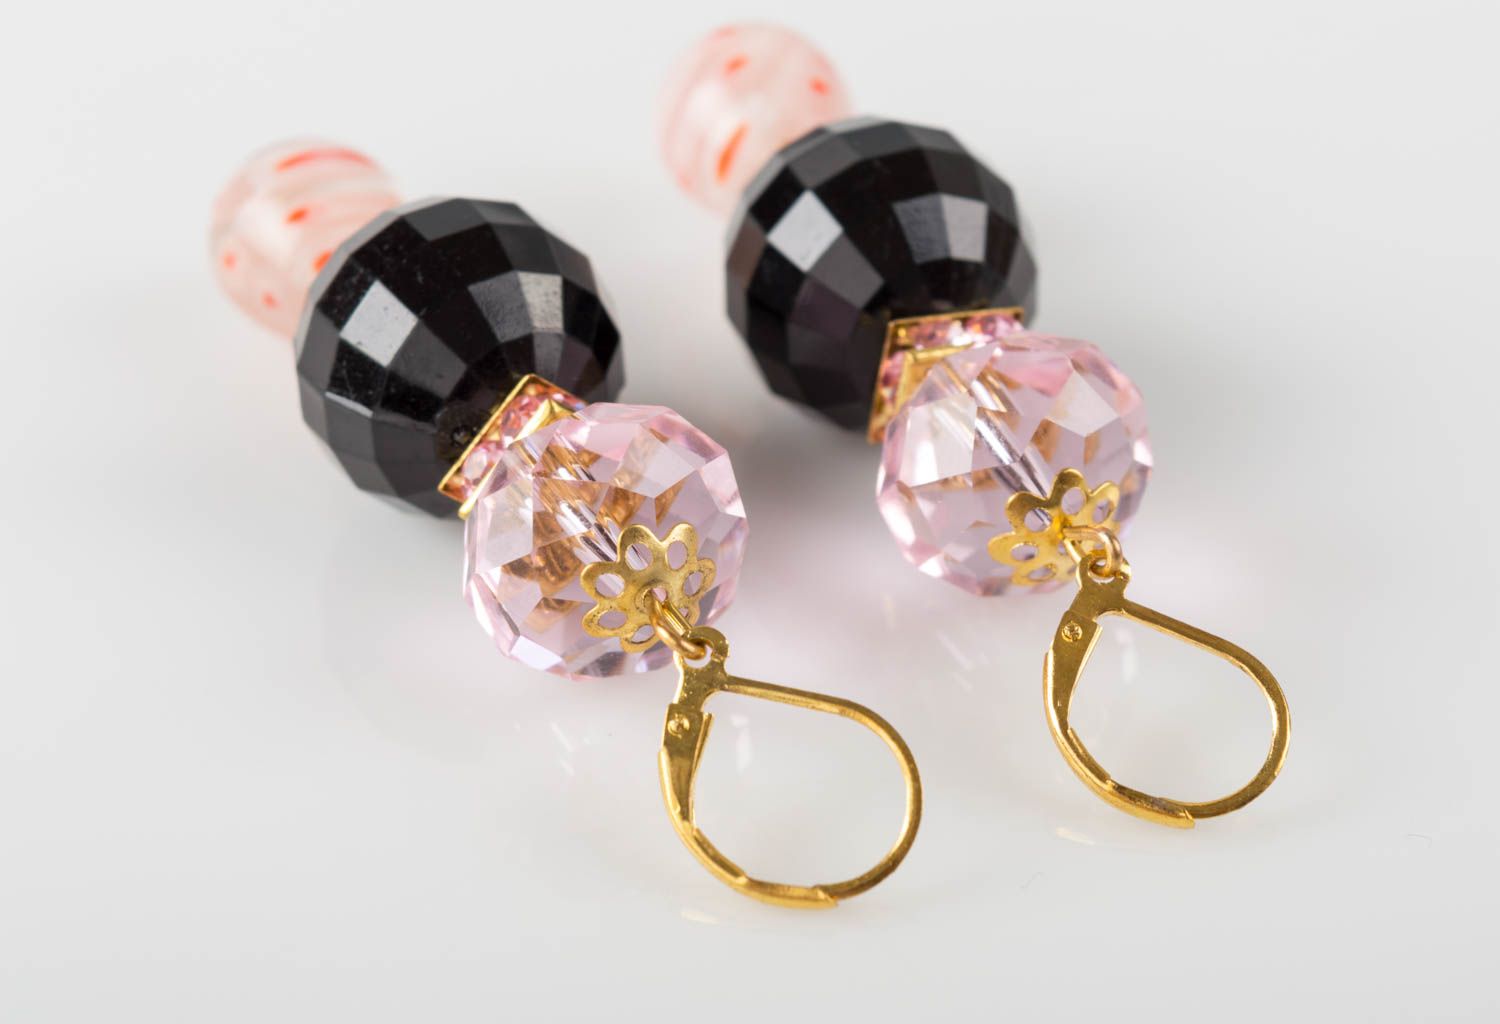 Unusual homemade plastic earrings crystal earrings evening jewelry designs photo 3